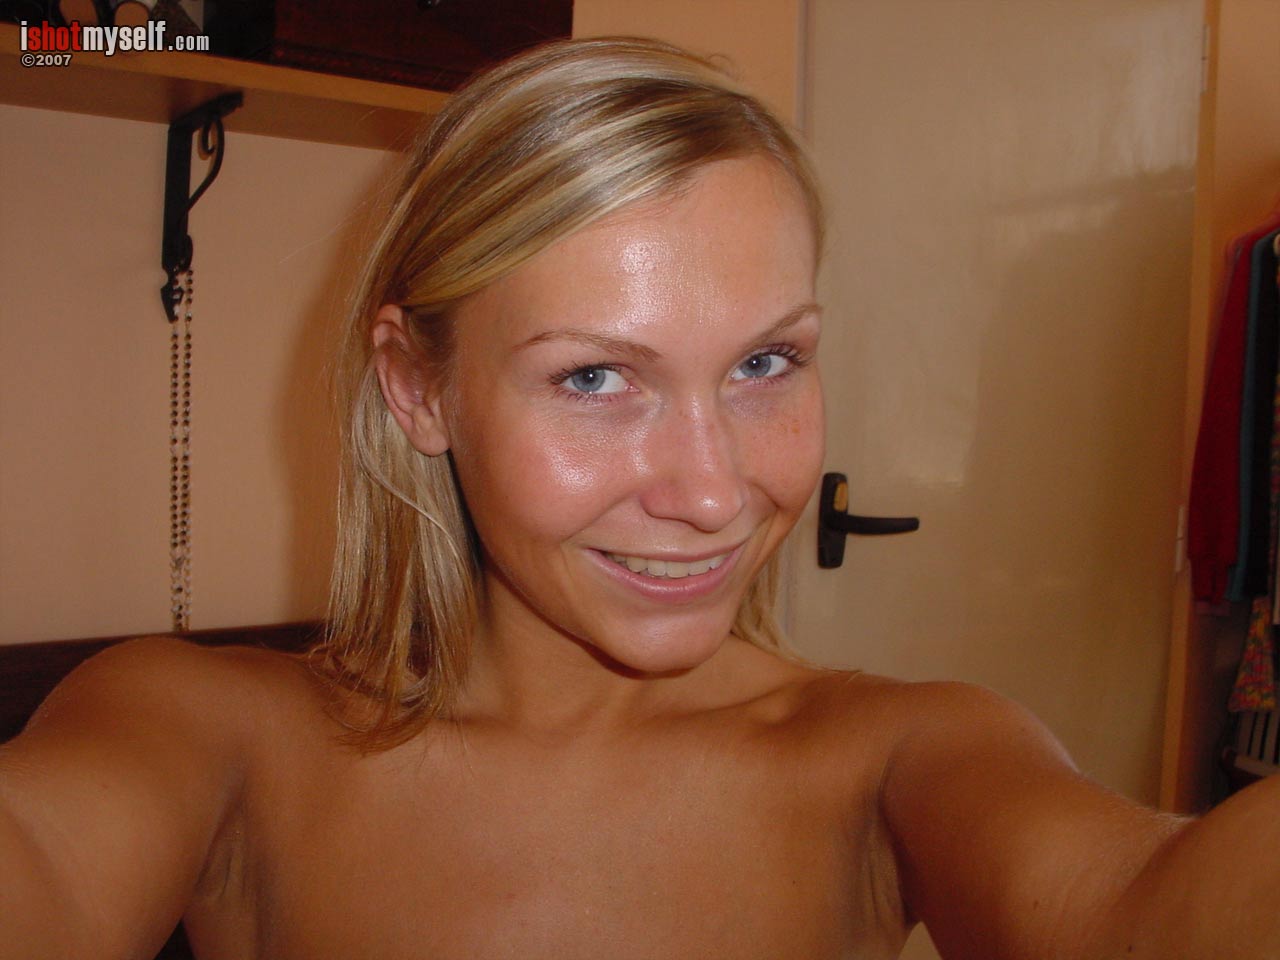 fiala-nude-blonde-taned-pussy-selfie-ishotmyself-35